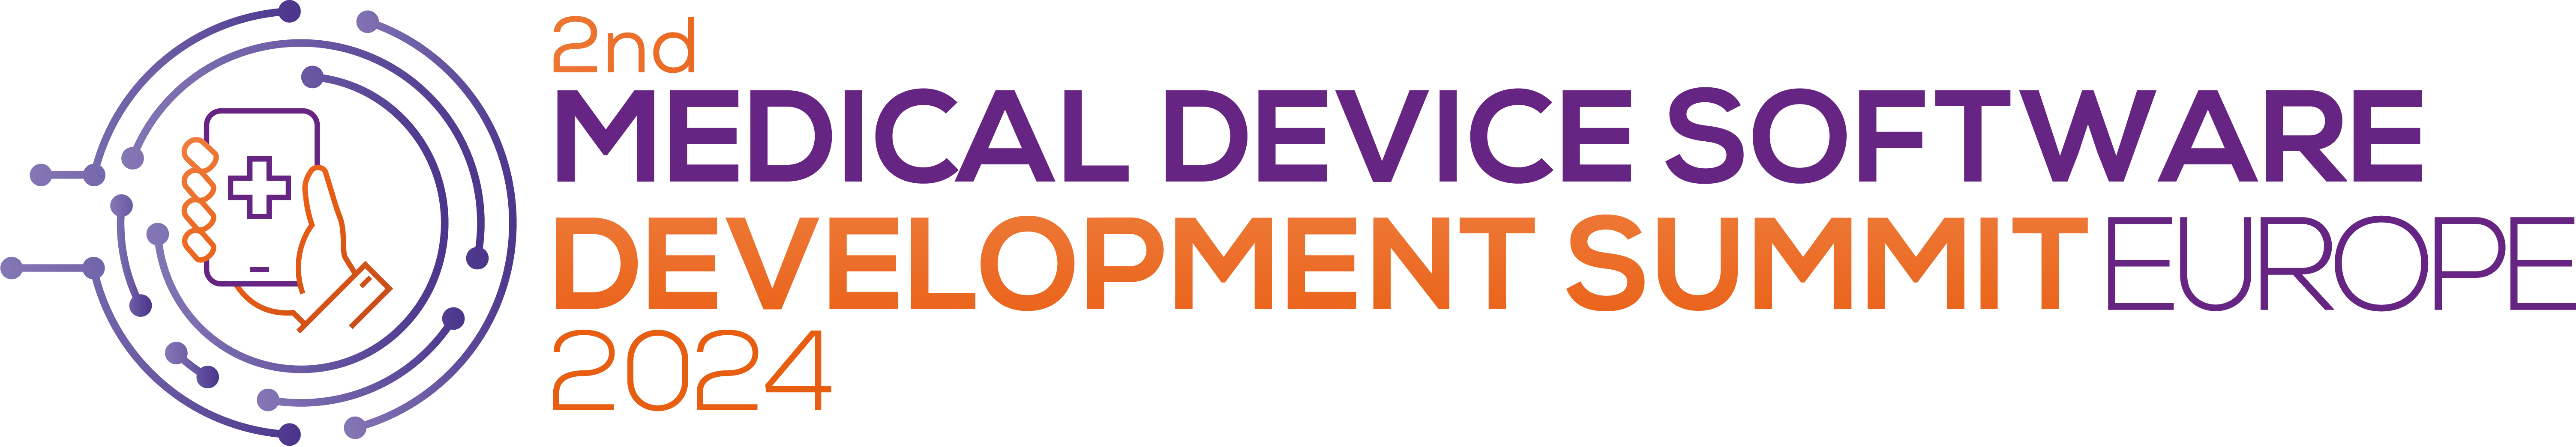 2nd Medical Device Software Development logo Europe